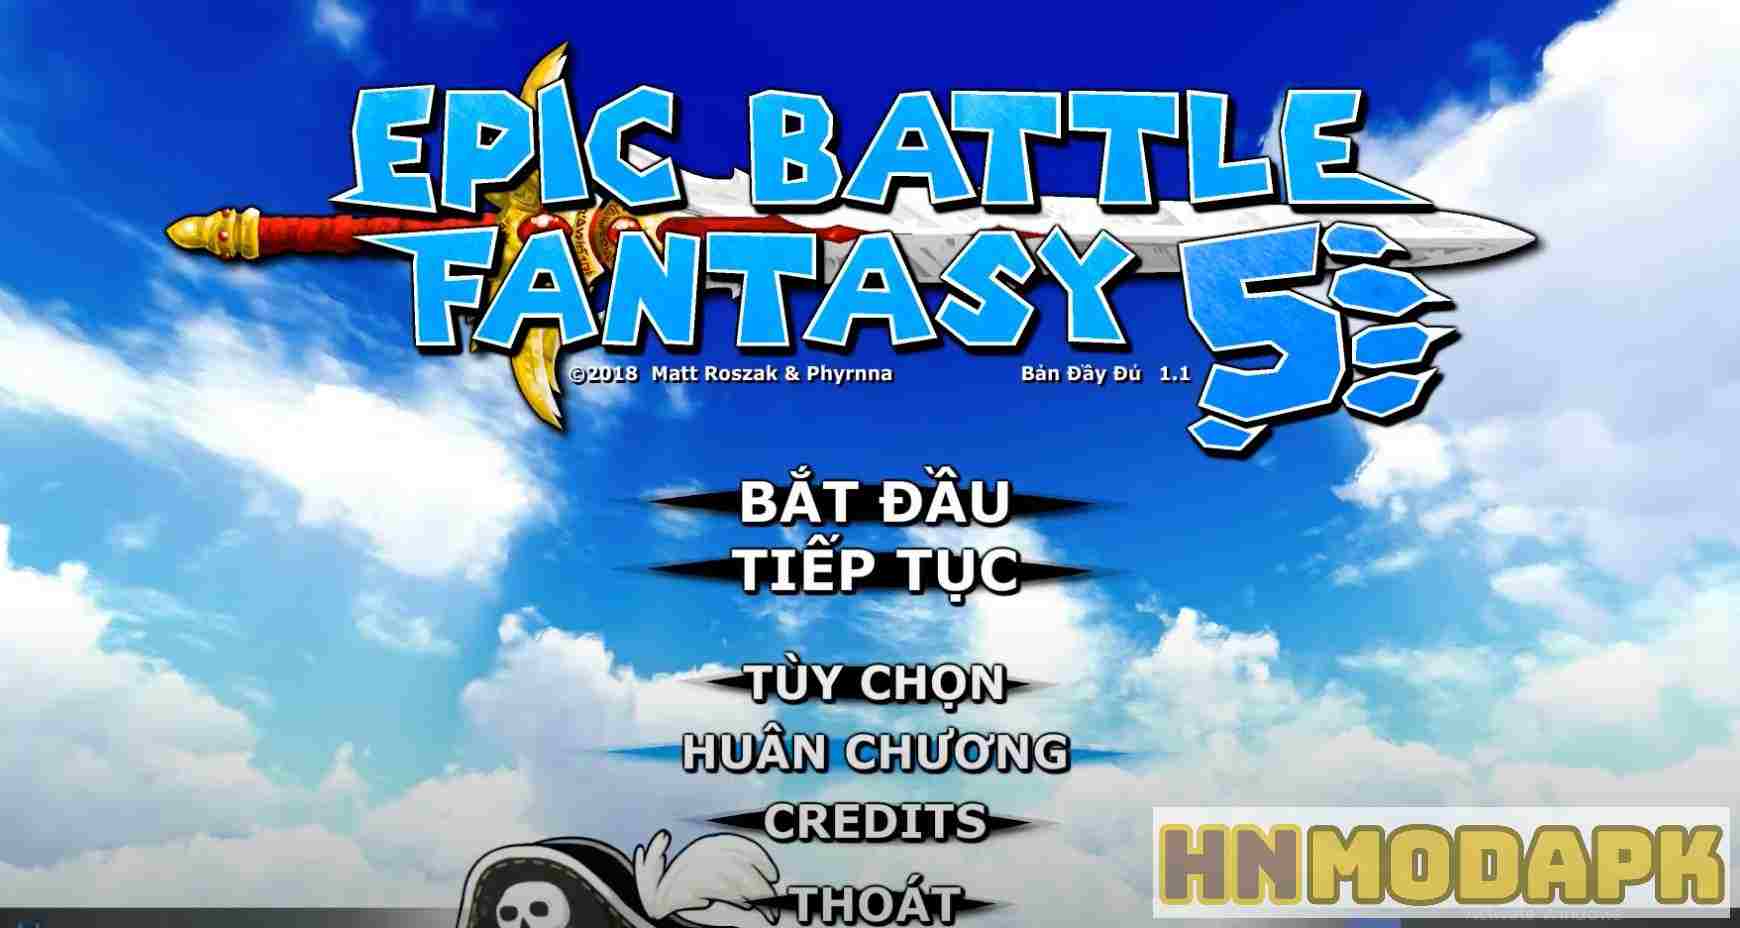 Epic Battle Fantasy 5 MOD (Vietnamese Menu Pro, Full Content, Remove ADS) APK 1.0.51